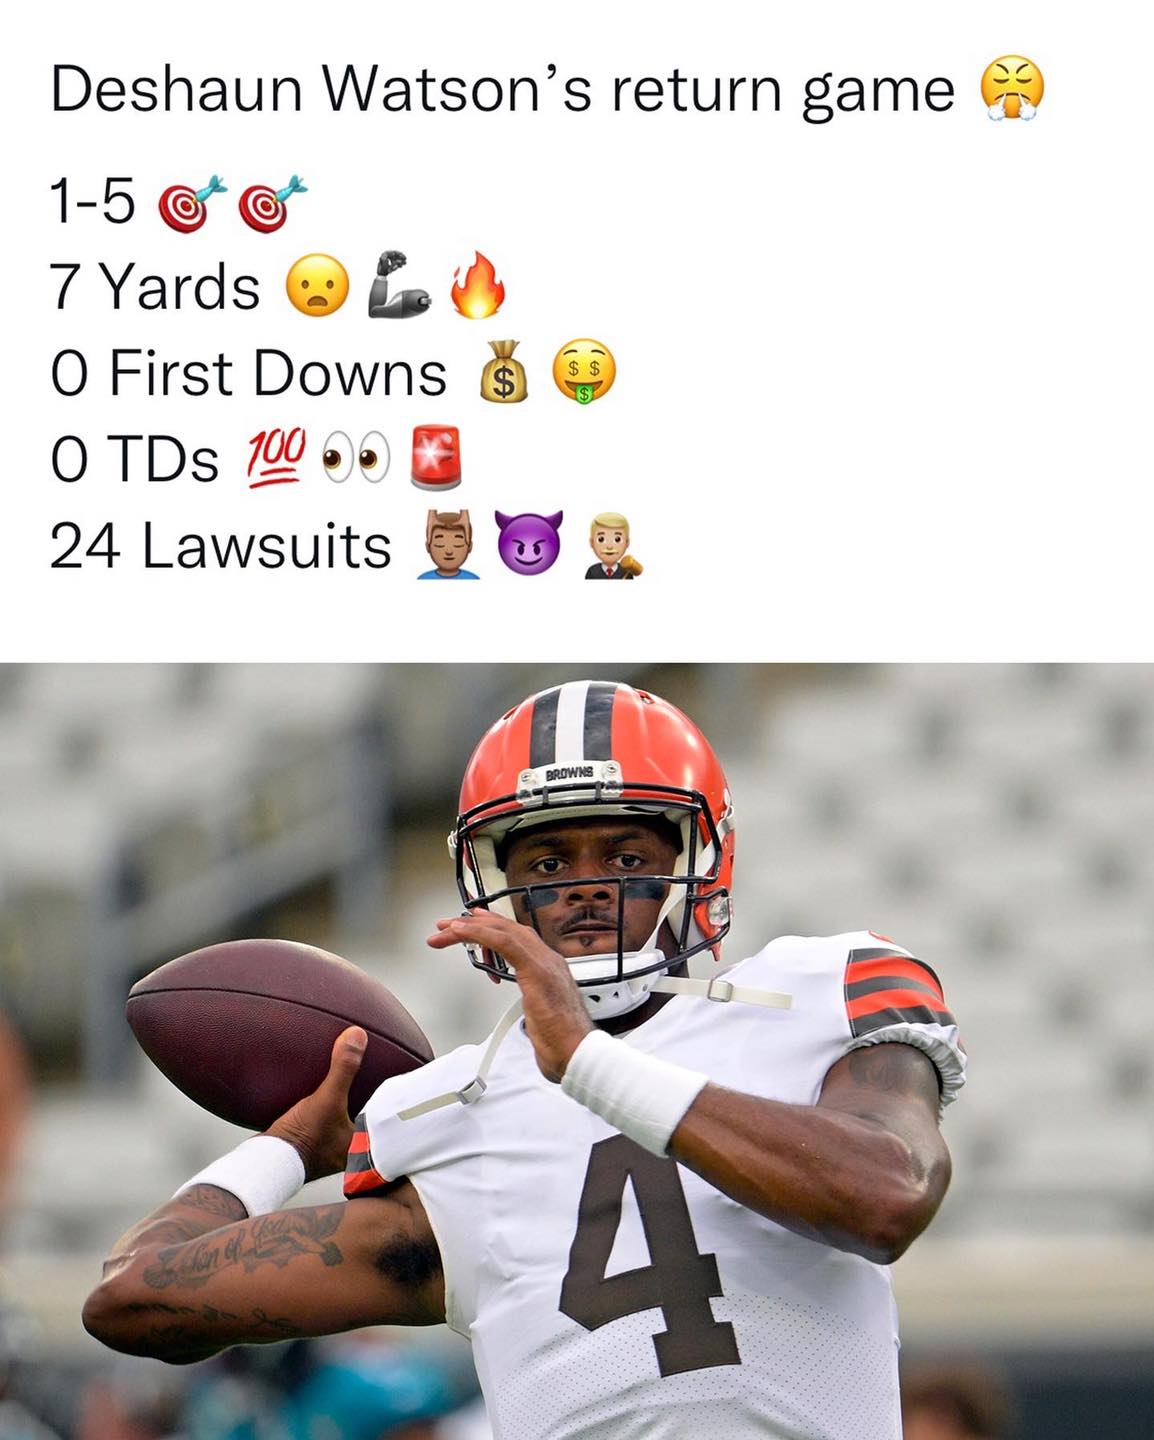 NFL football memes - deshaun watson - Deshaun Watson's return game 15 O 7 Yards O First Downs $ O Tds 100 0 24 Lawsuits Son of Love $ Browns 4